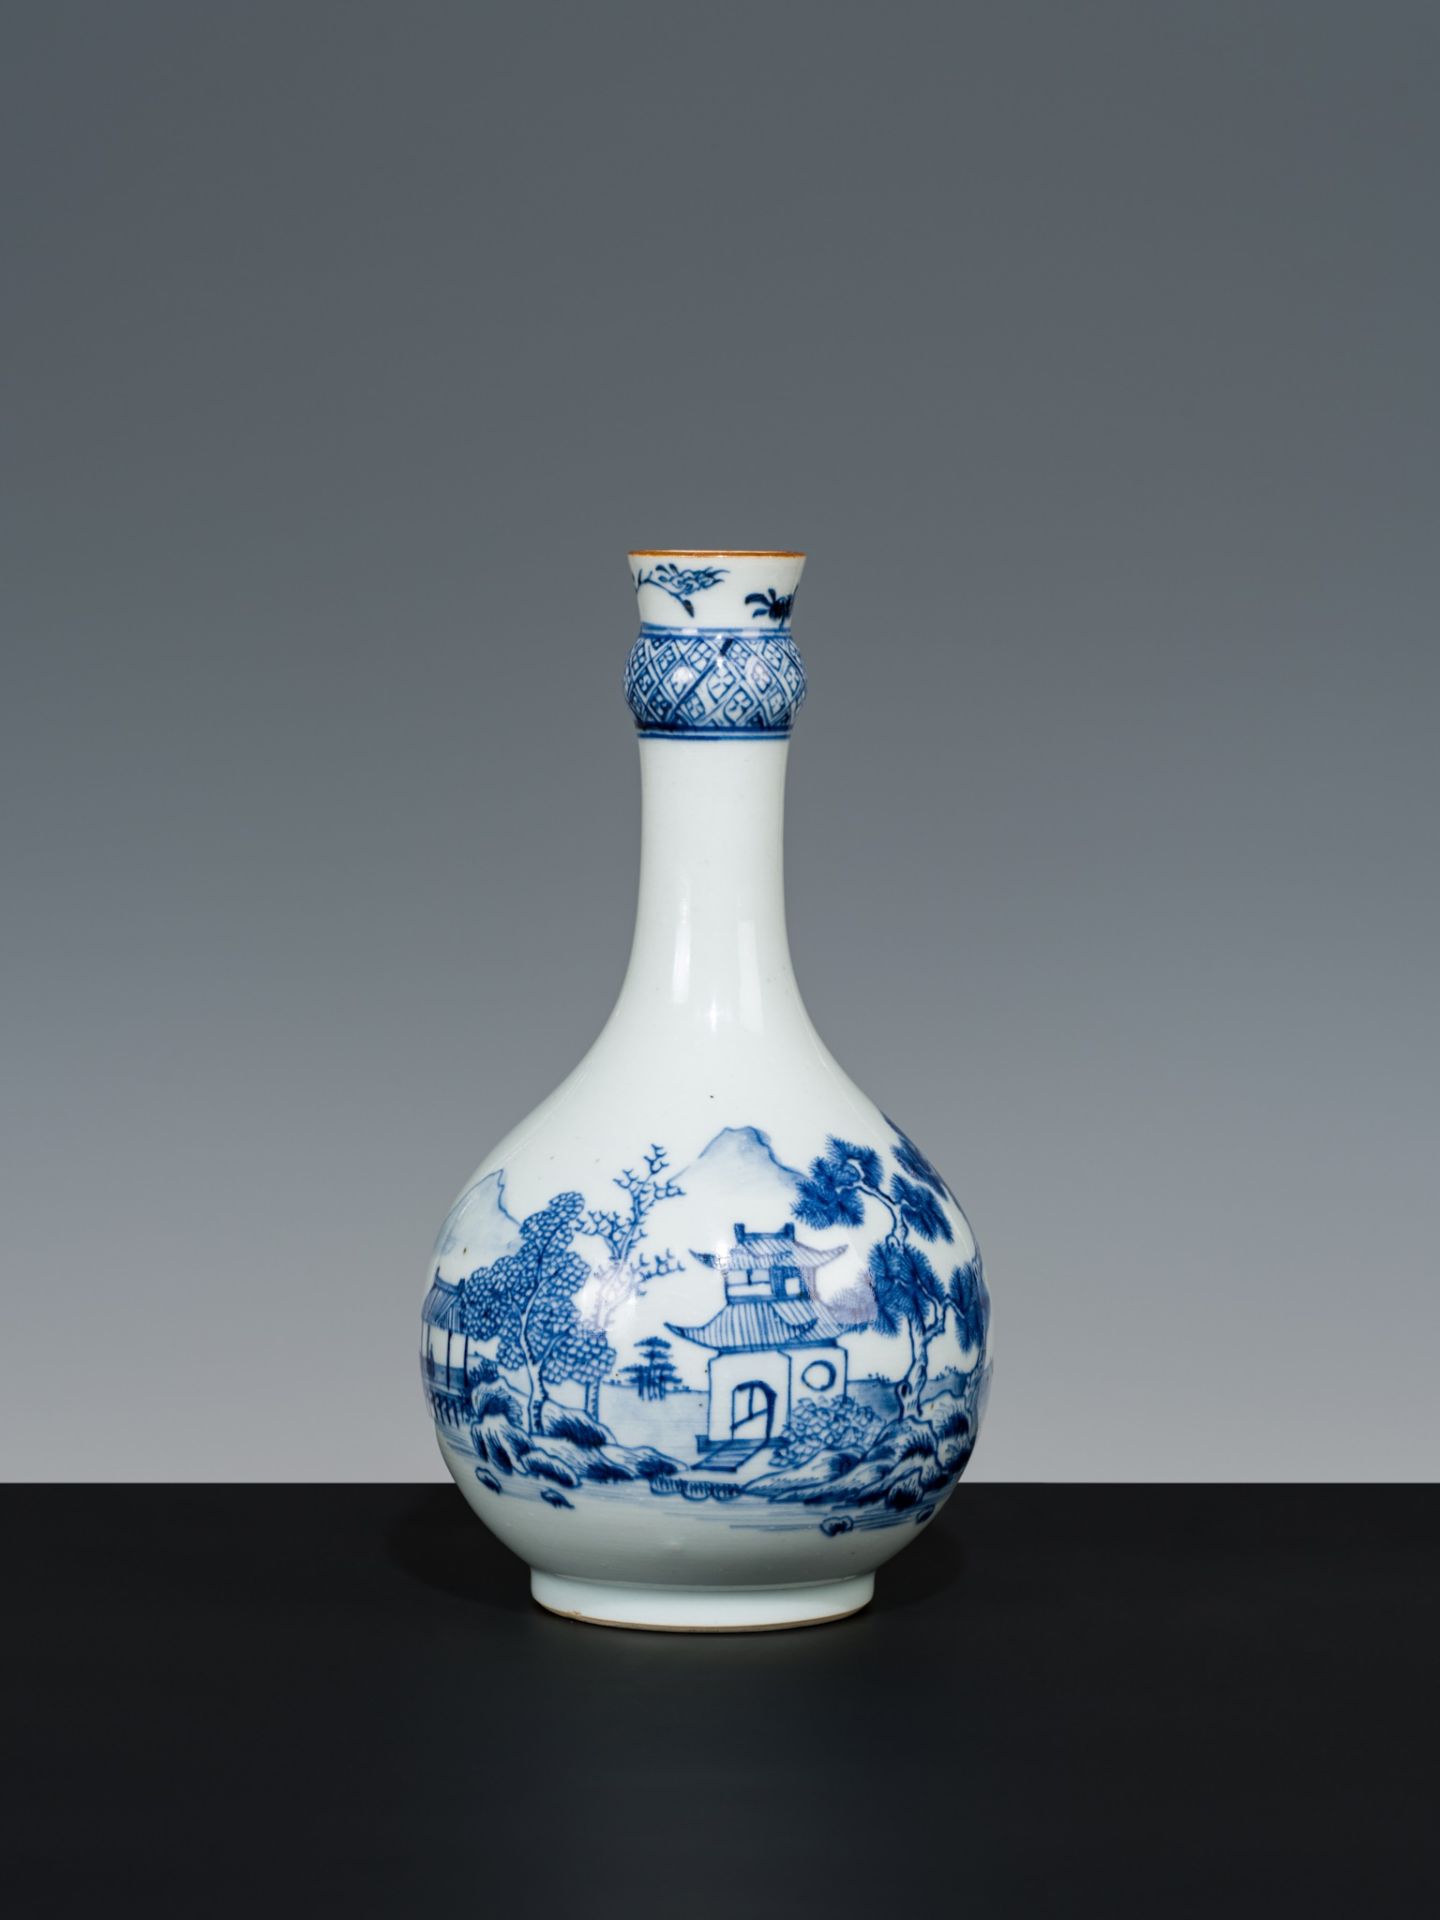 A BLUE AND WHITE PORCELAIN BOTTLE VASE, CHINA, 18TH CENTURY - Image 6 of 8